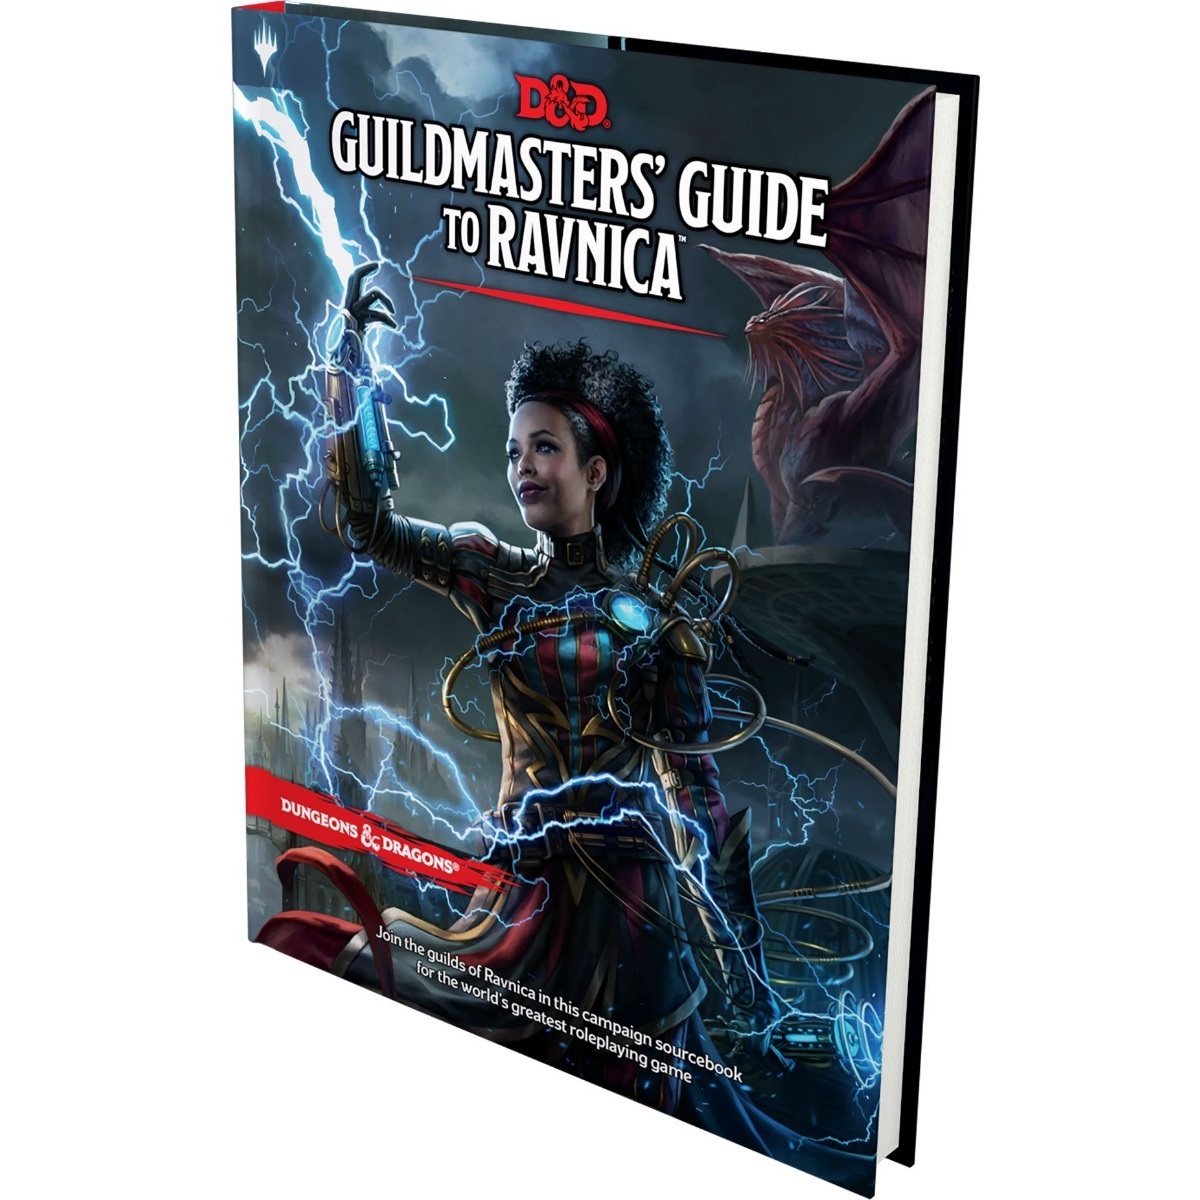 download guildmasters guide